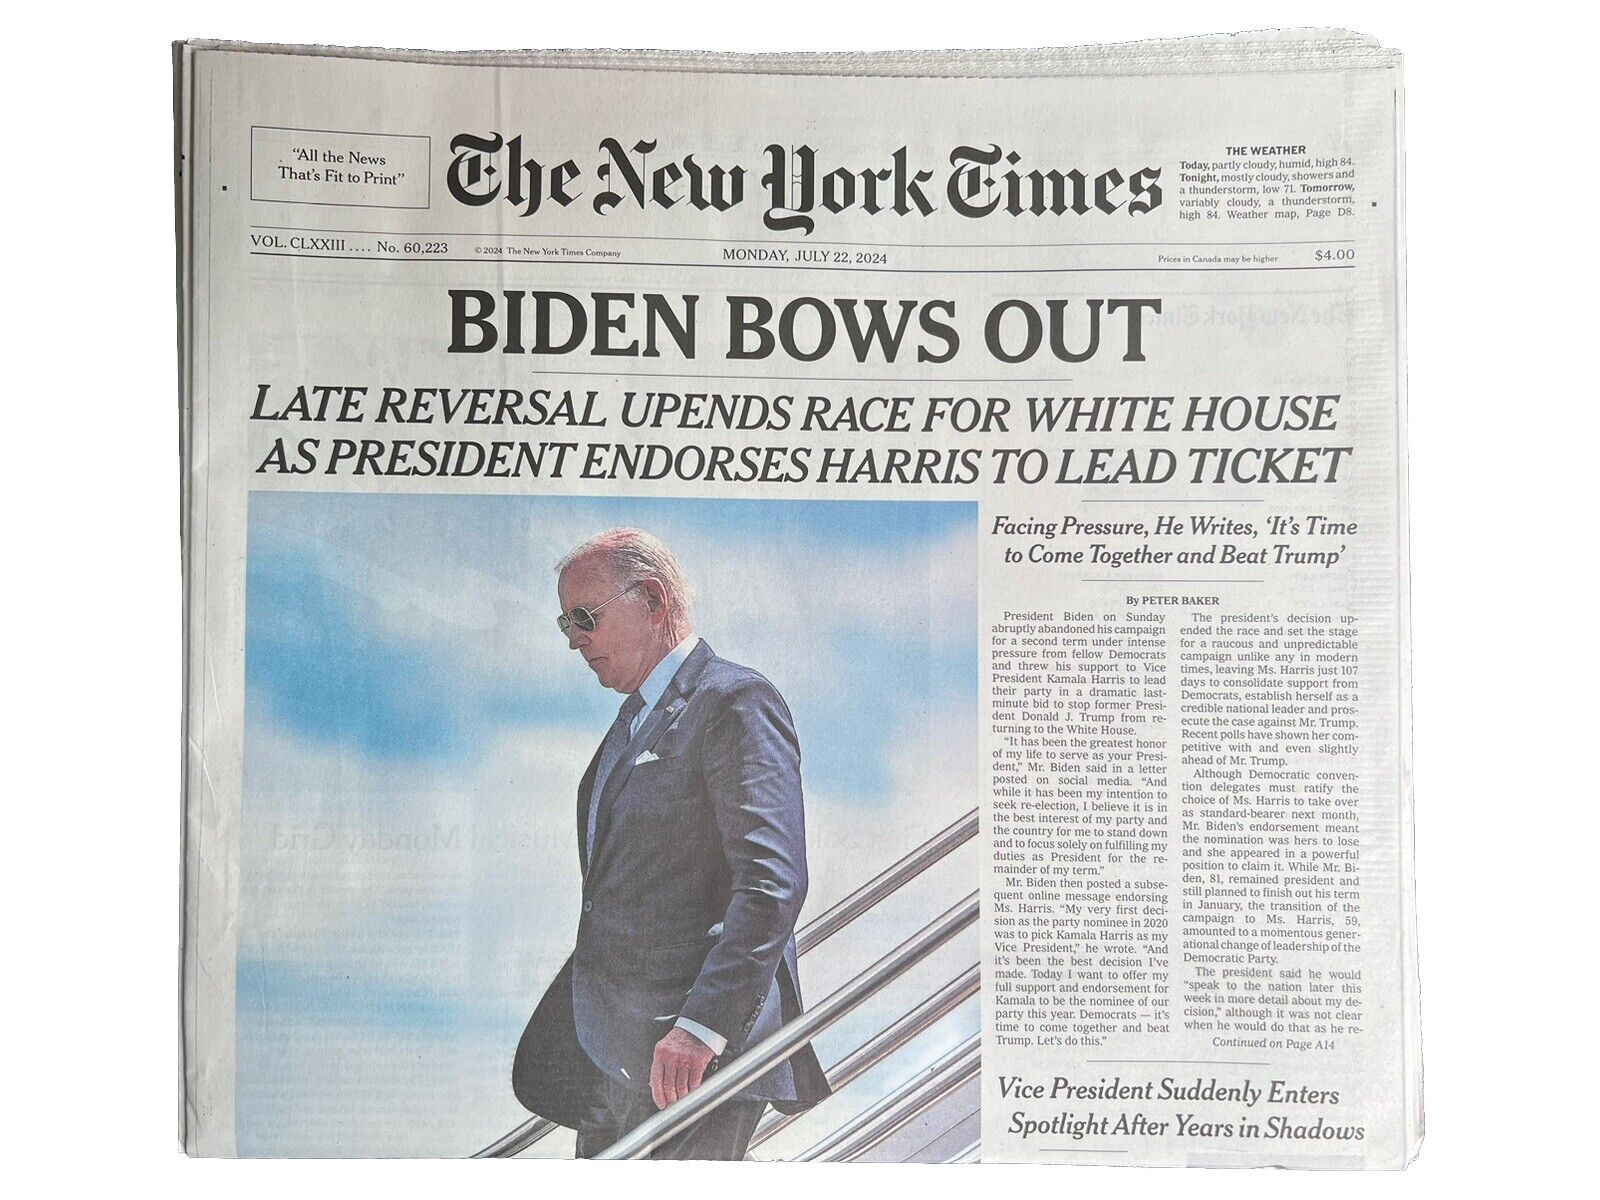 JOE BIDEN BOWS OUT NEW YORK TIMES NEW YORK NEWSPAPER JULY 22 2024